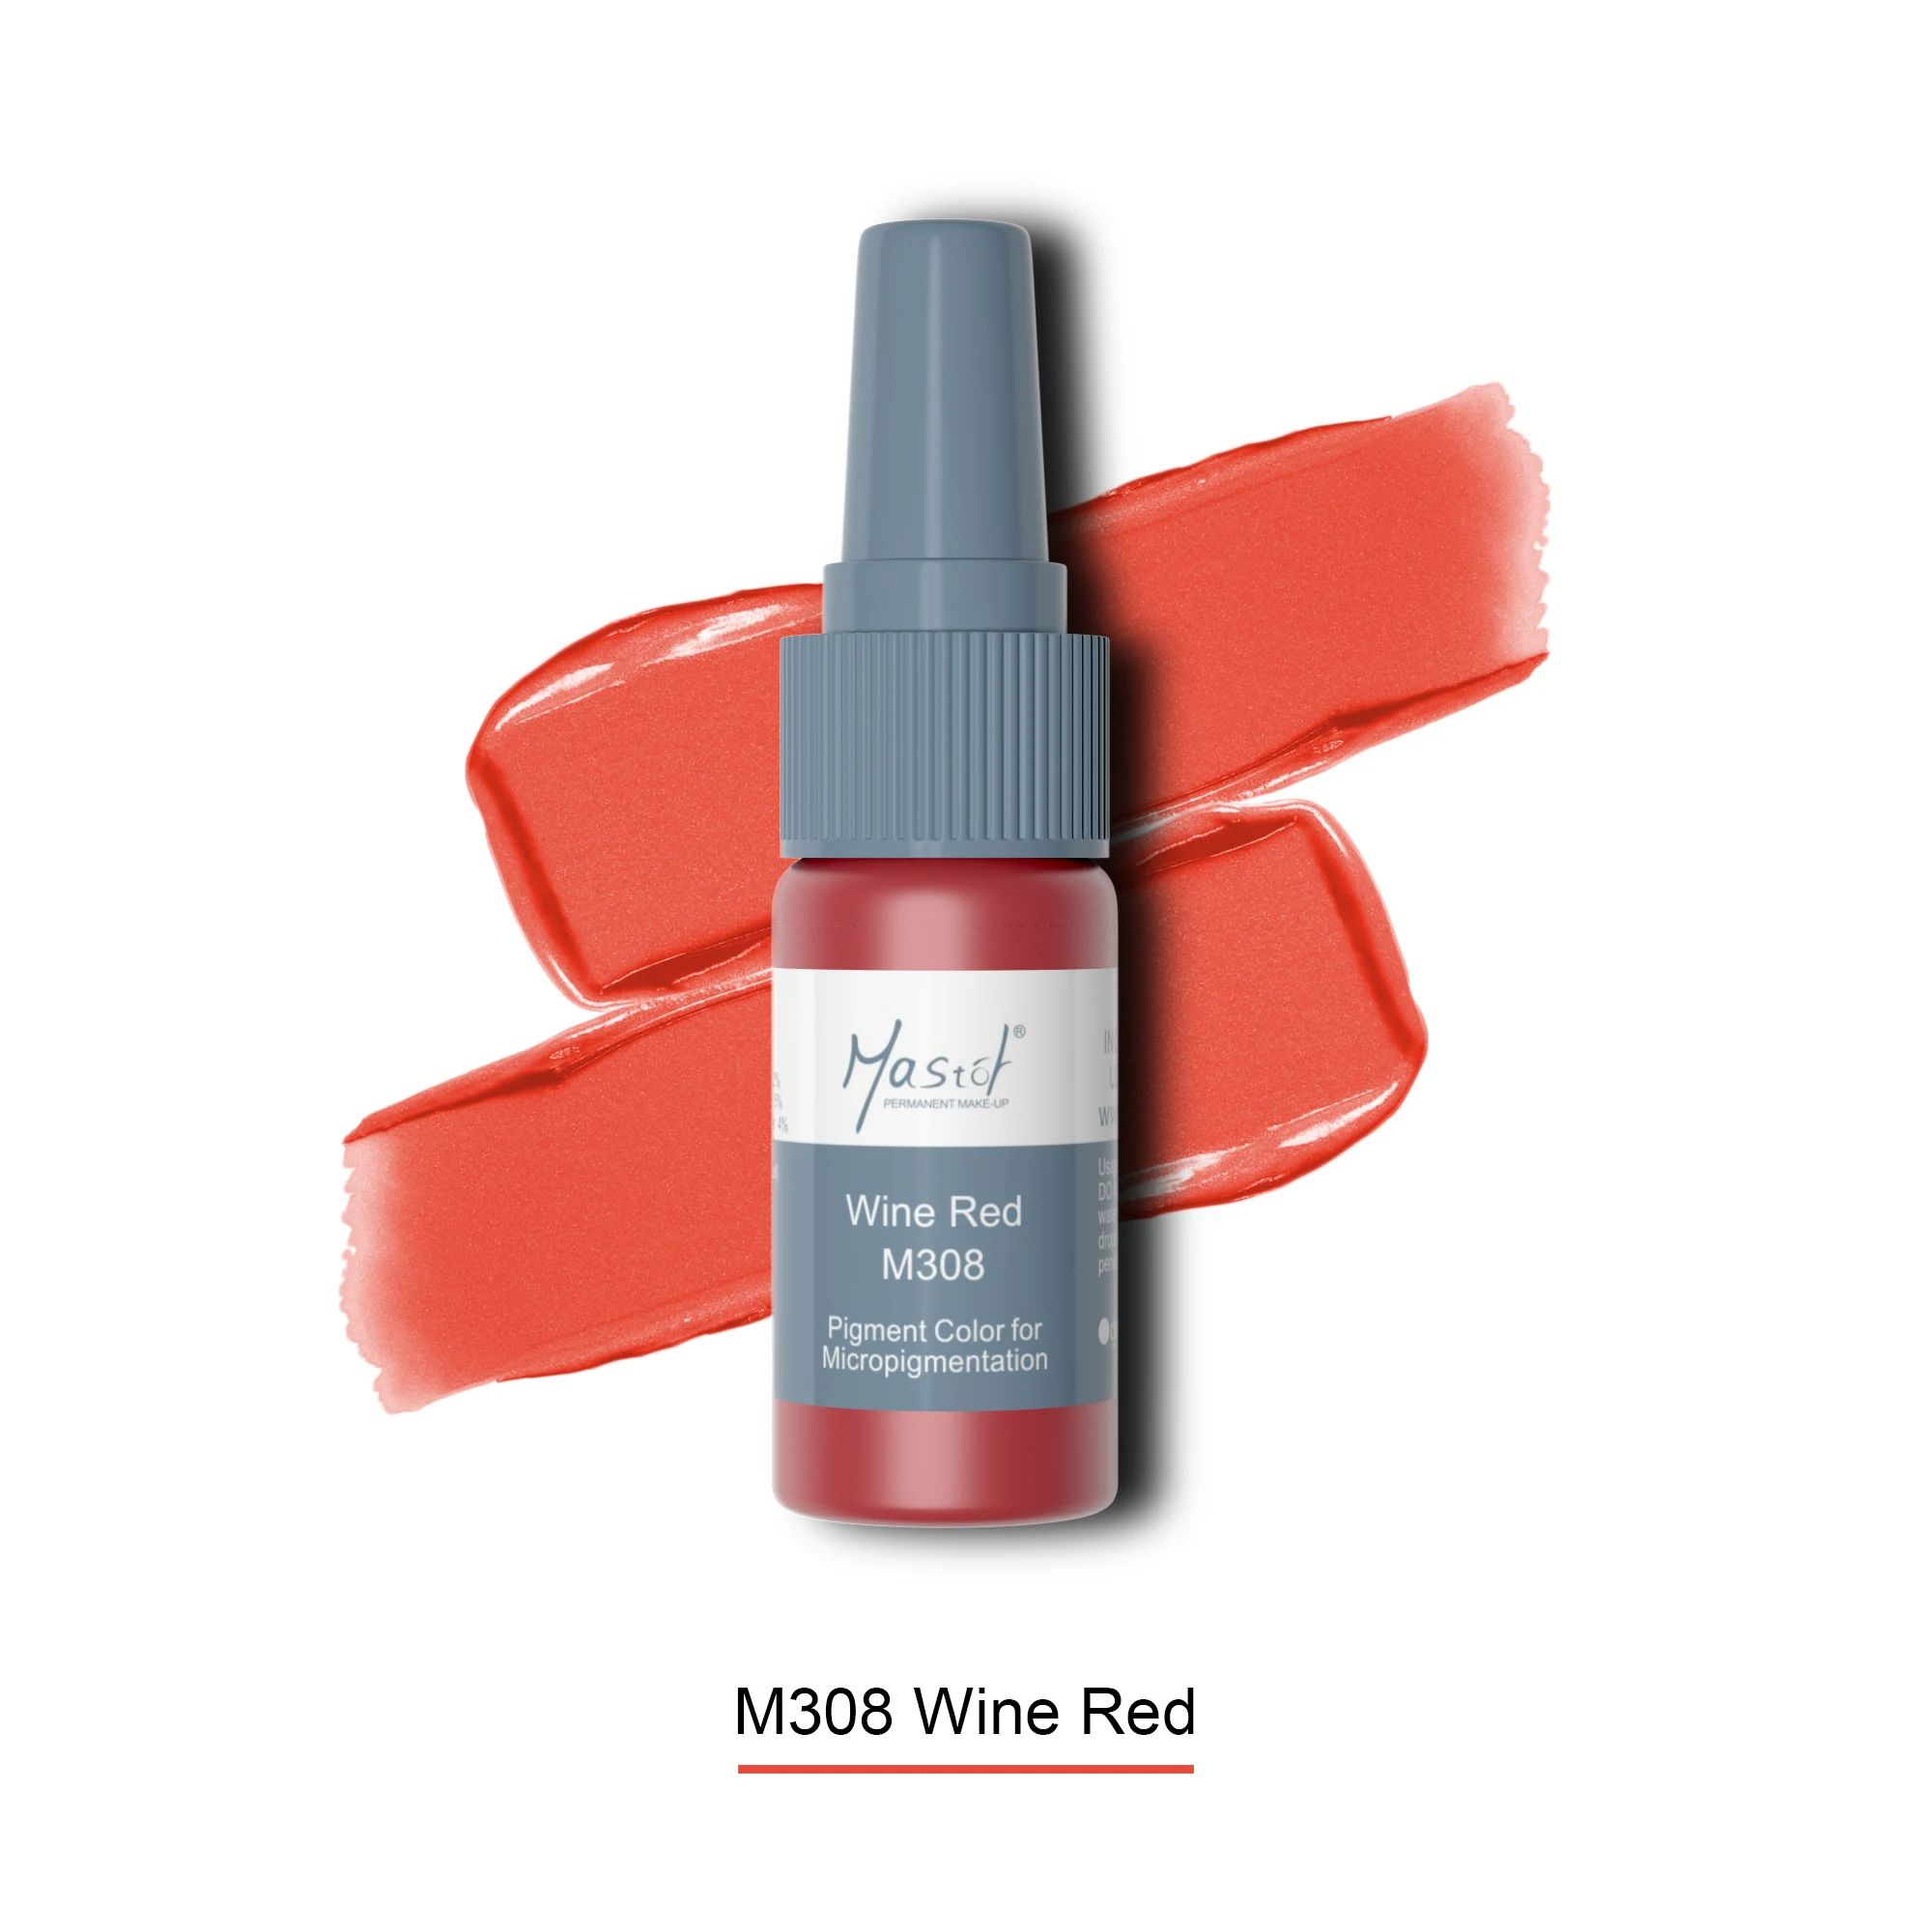 M308 Wine Red